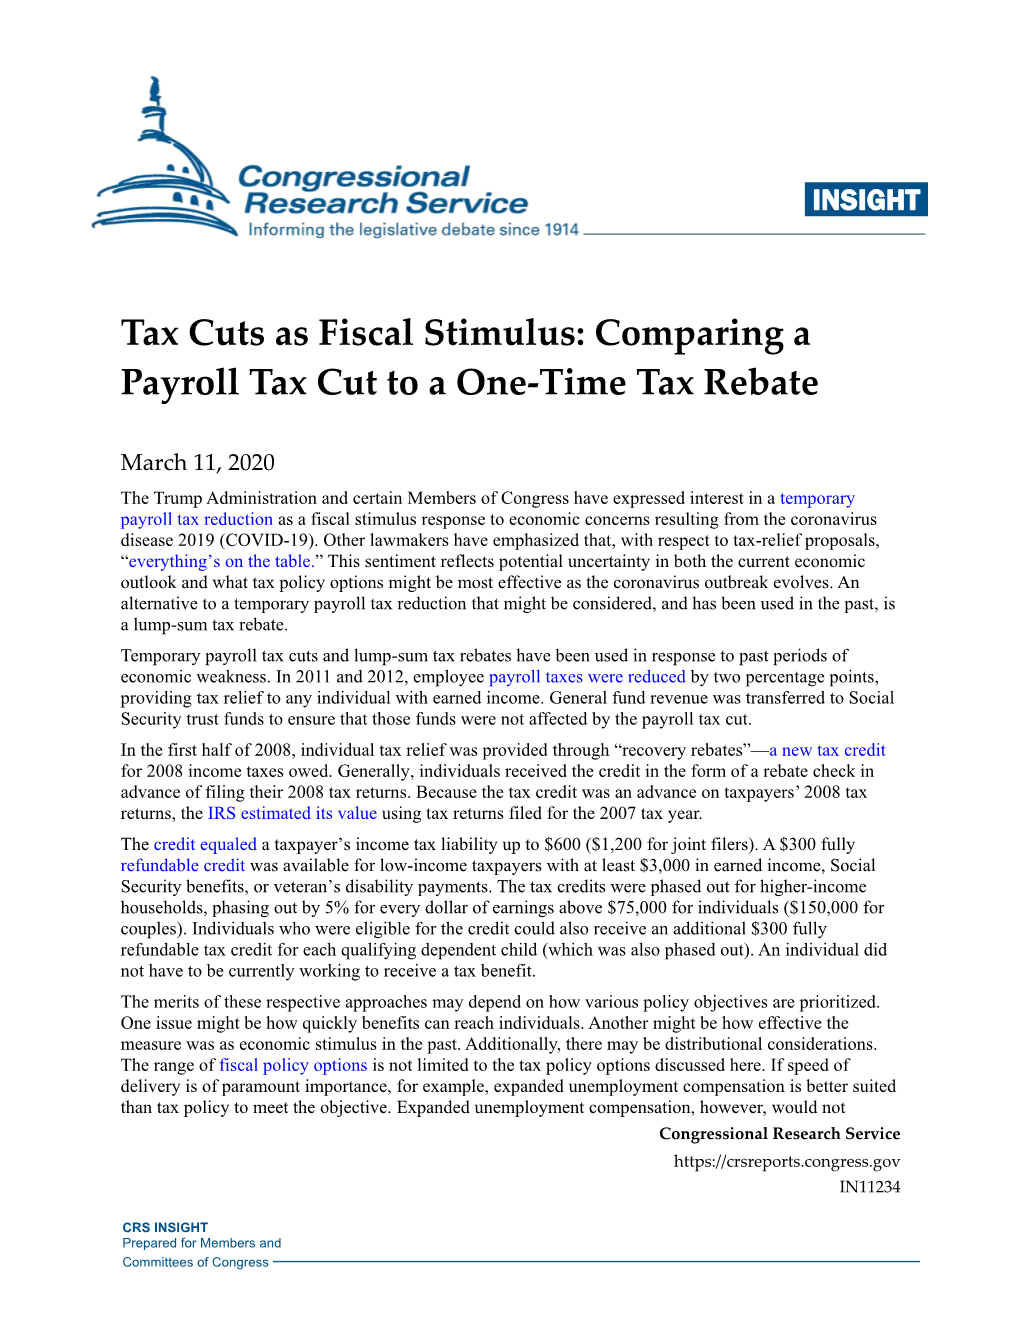 Tax Cuts As Fiscal Stimulus: Comparing a Payroll Tax Cut to a One-Time Tax Rebate